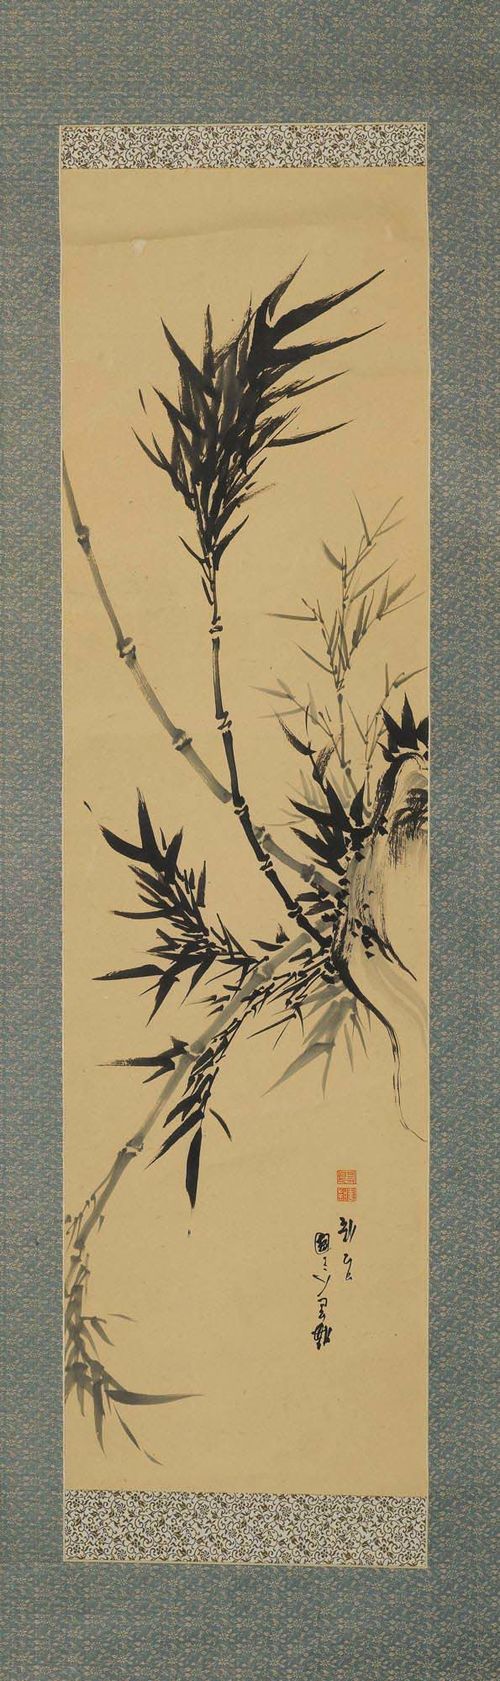 KAKEMONO WITH BAMBOO PAINTING.Japan, Meiji Period, 160x30.5 cm. Ink on paper. Signed Arinobu, with seal. Probably Mitani Arinobu. Brocade border. Creases.